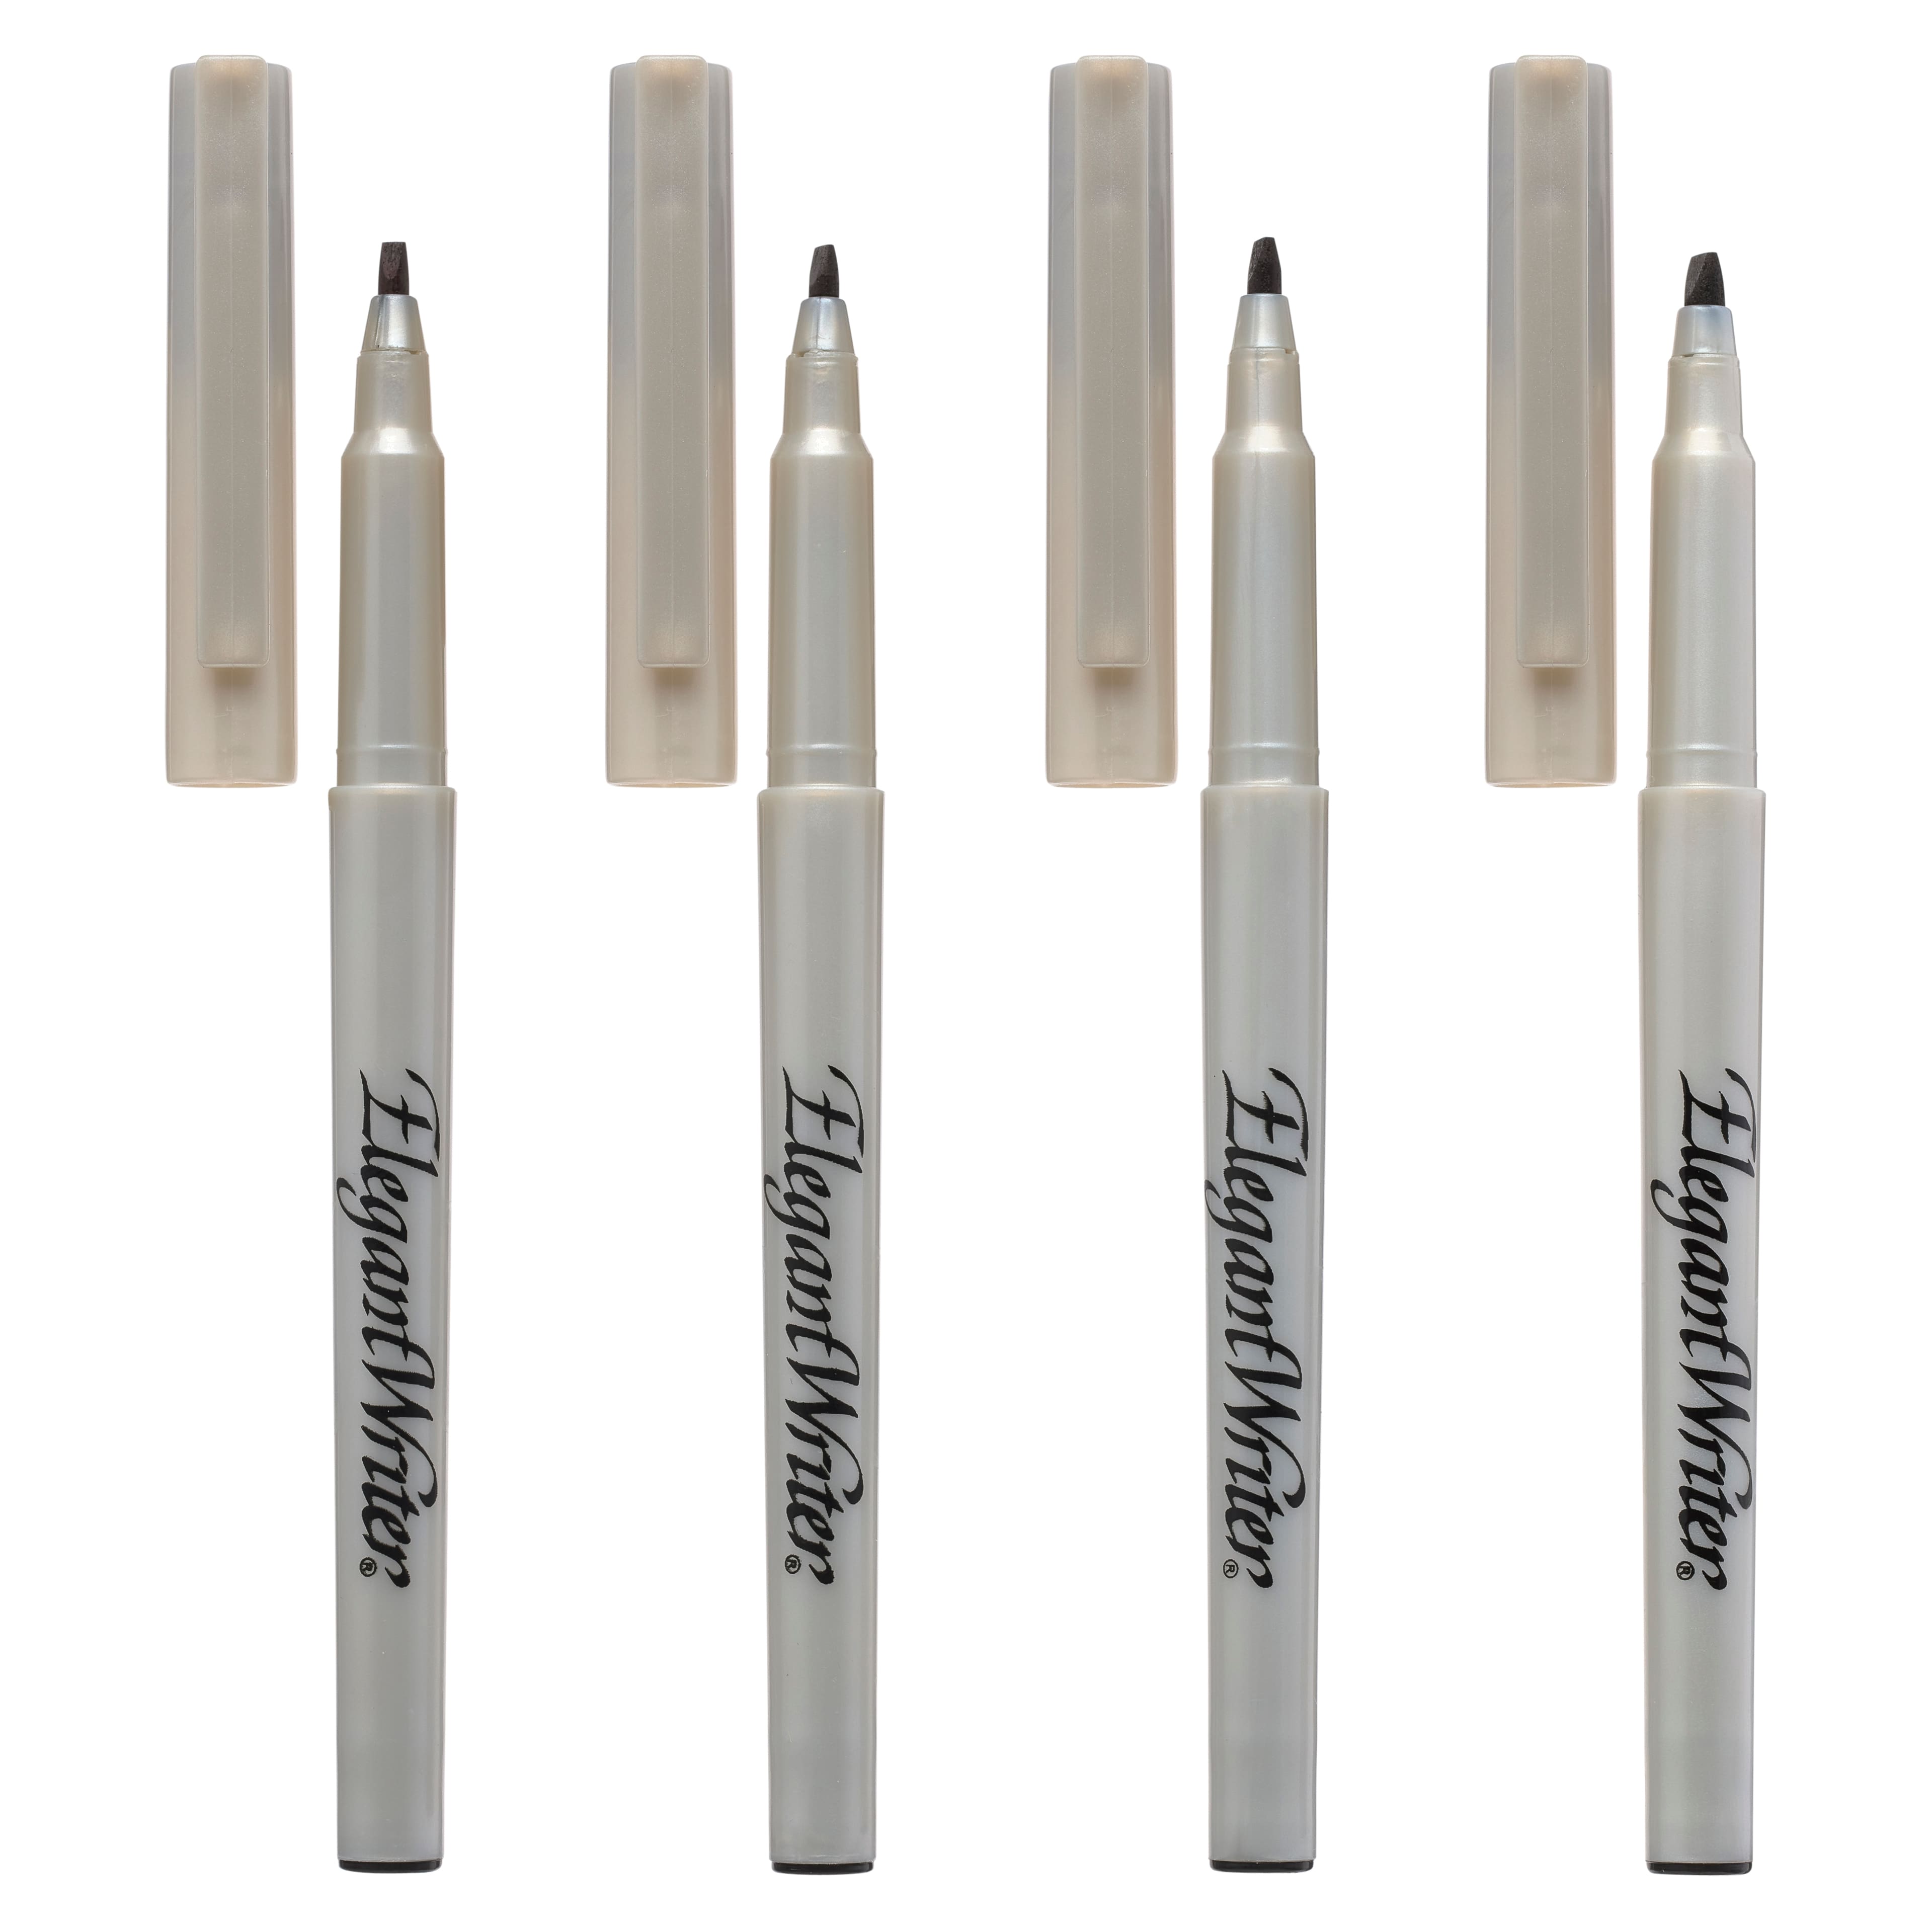 Pilot Parallel Pen Hand Lettering Calligraphy Set - The Goulet Pen Company